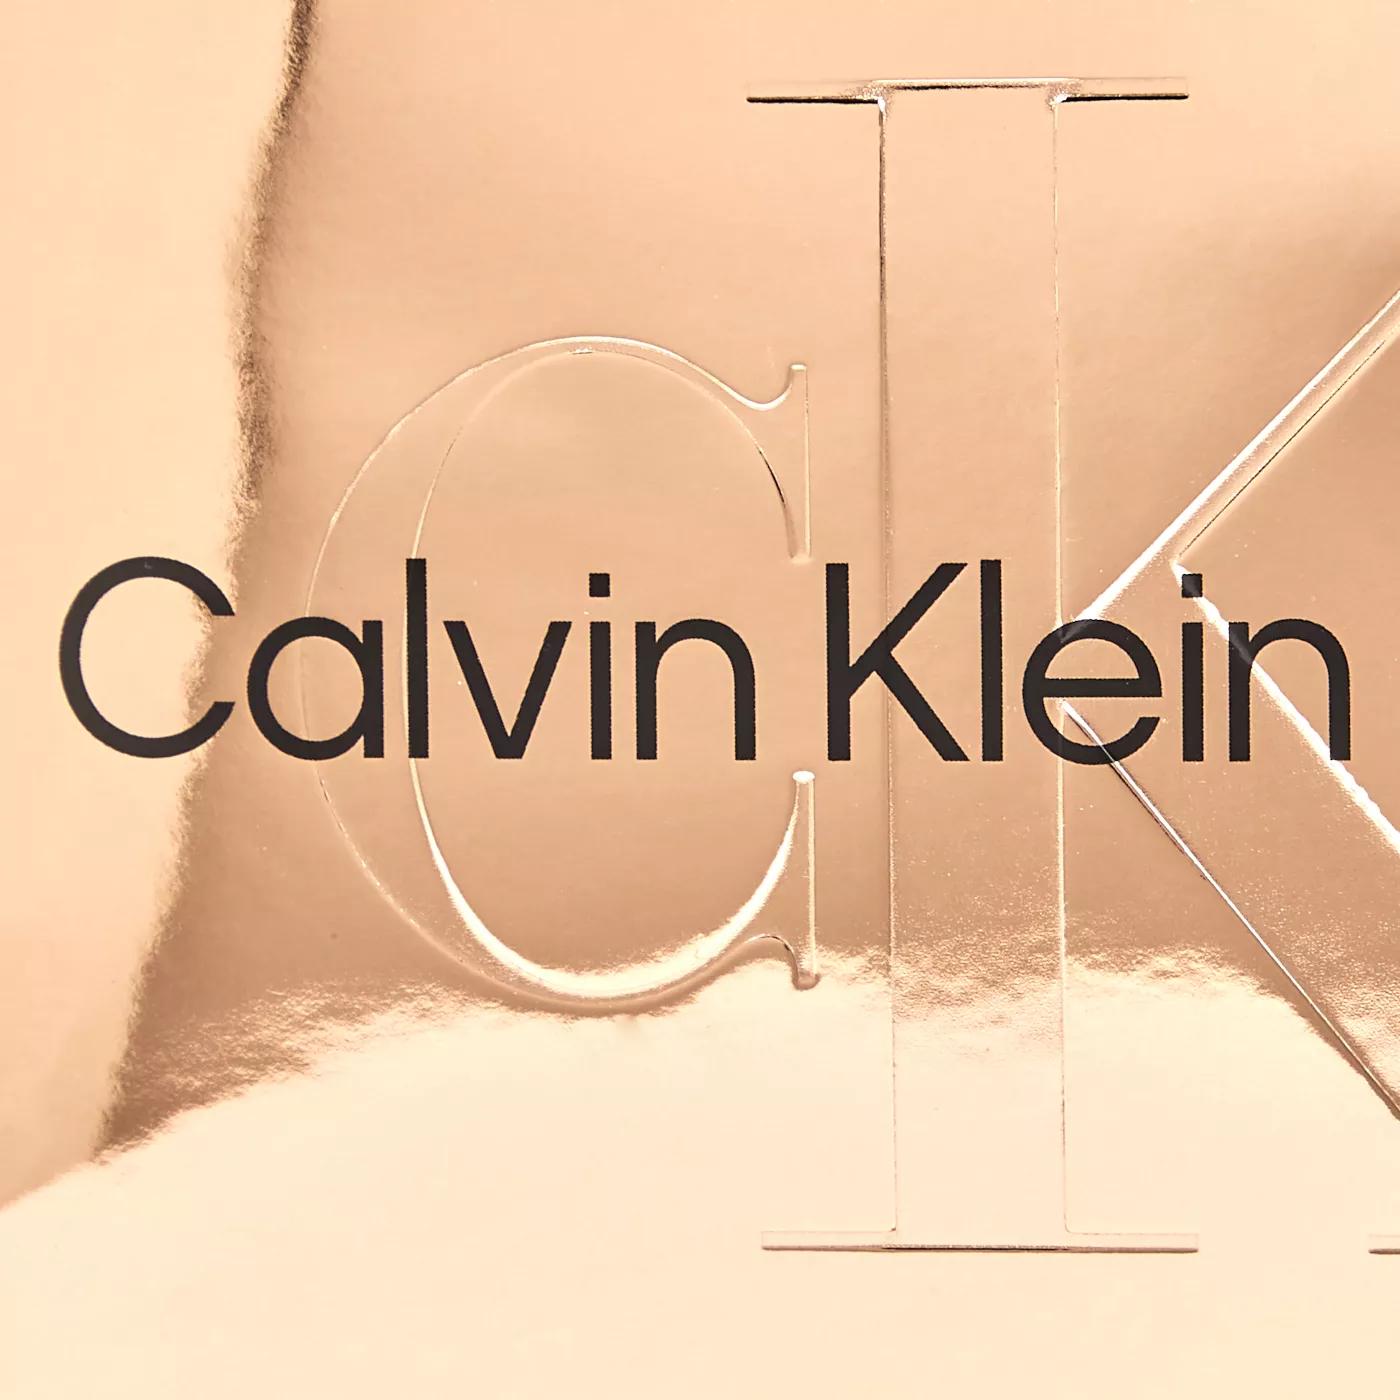 Calvin Klein Crossbody bags Sculpted Goldfarbene Handtasche K60K6 in goud